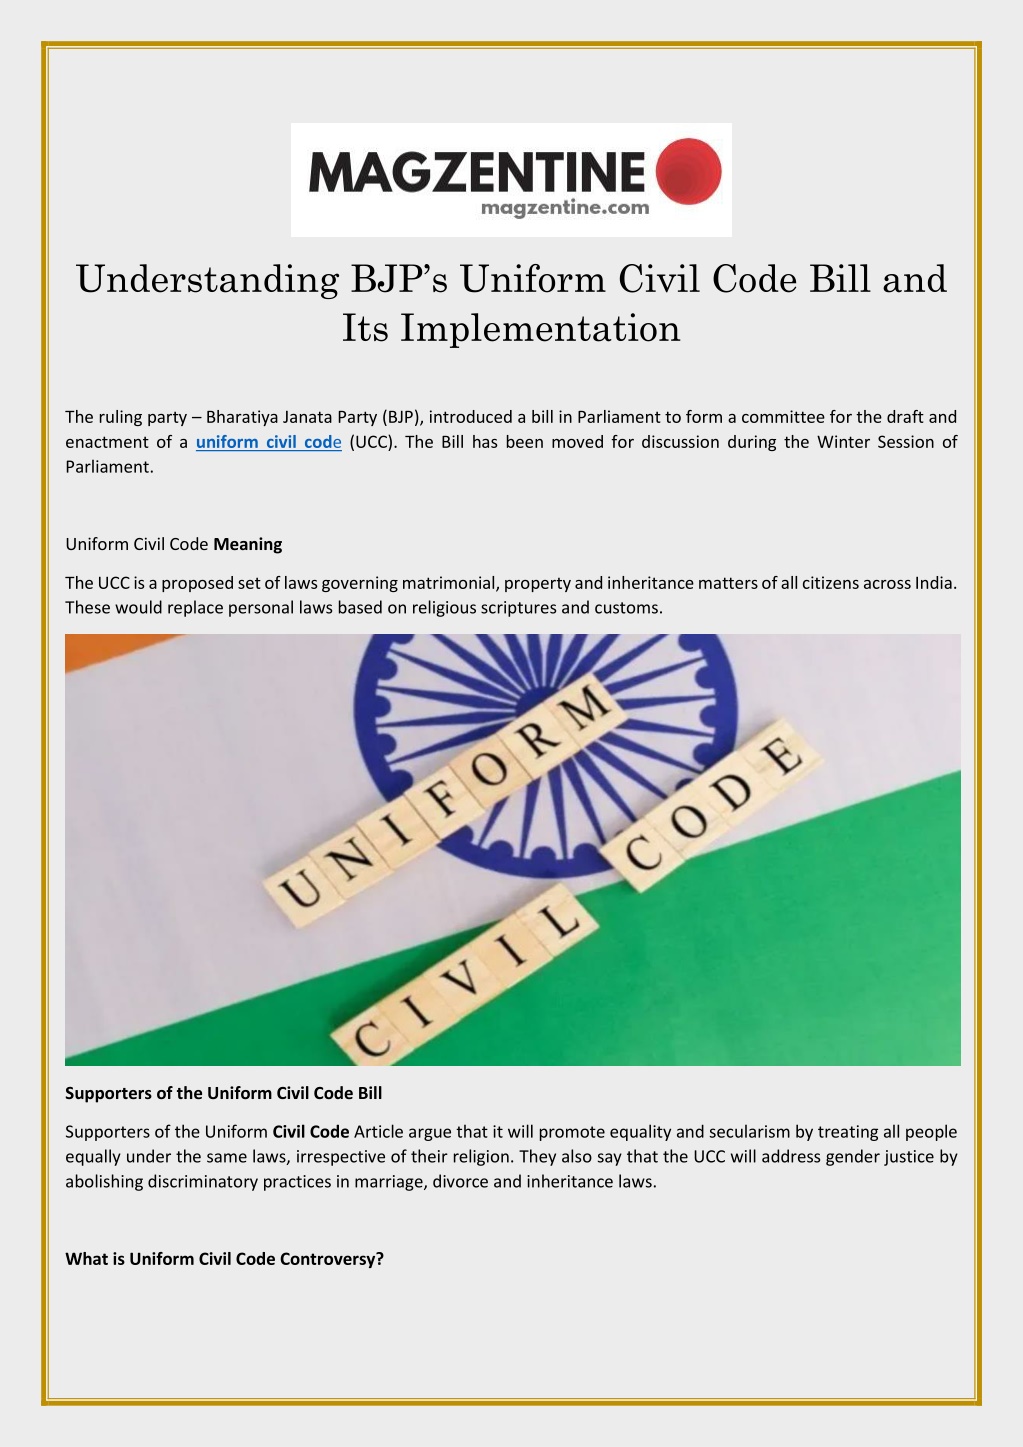 PPT Understanding BJP’s Uniform Civil Code Bill and Its